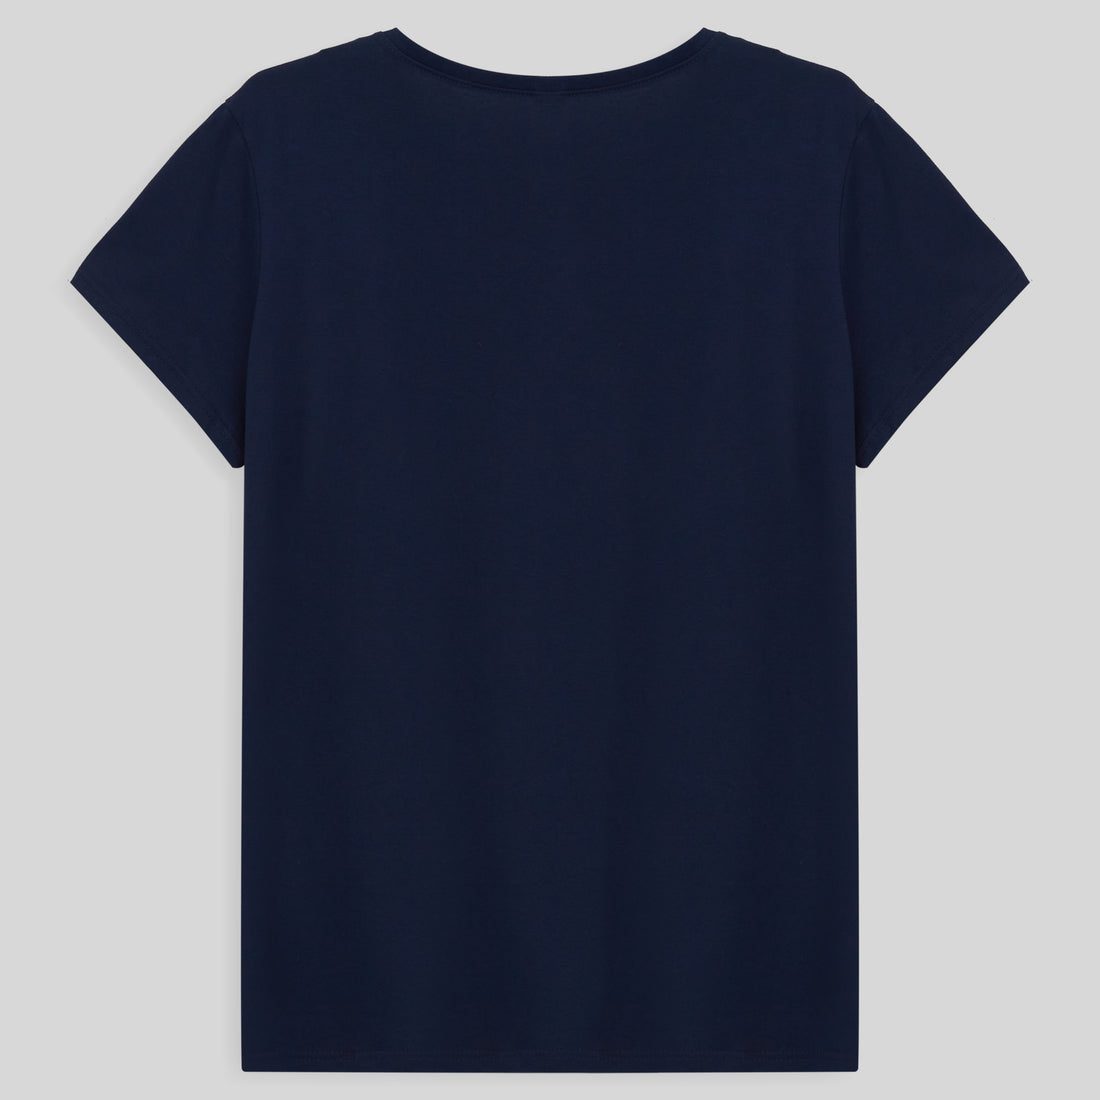 Camiseta Babylook Algodão Premium Gola V Plus Size Feminina